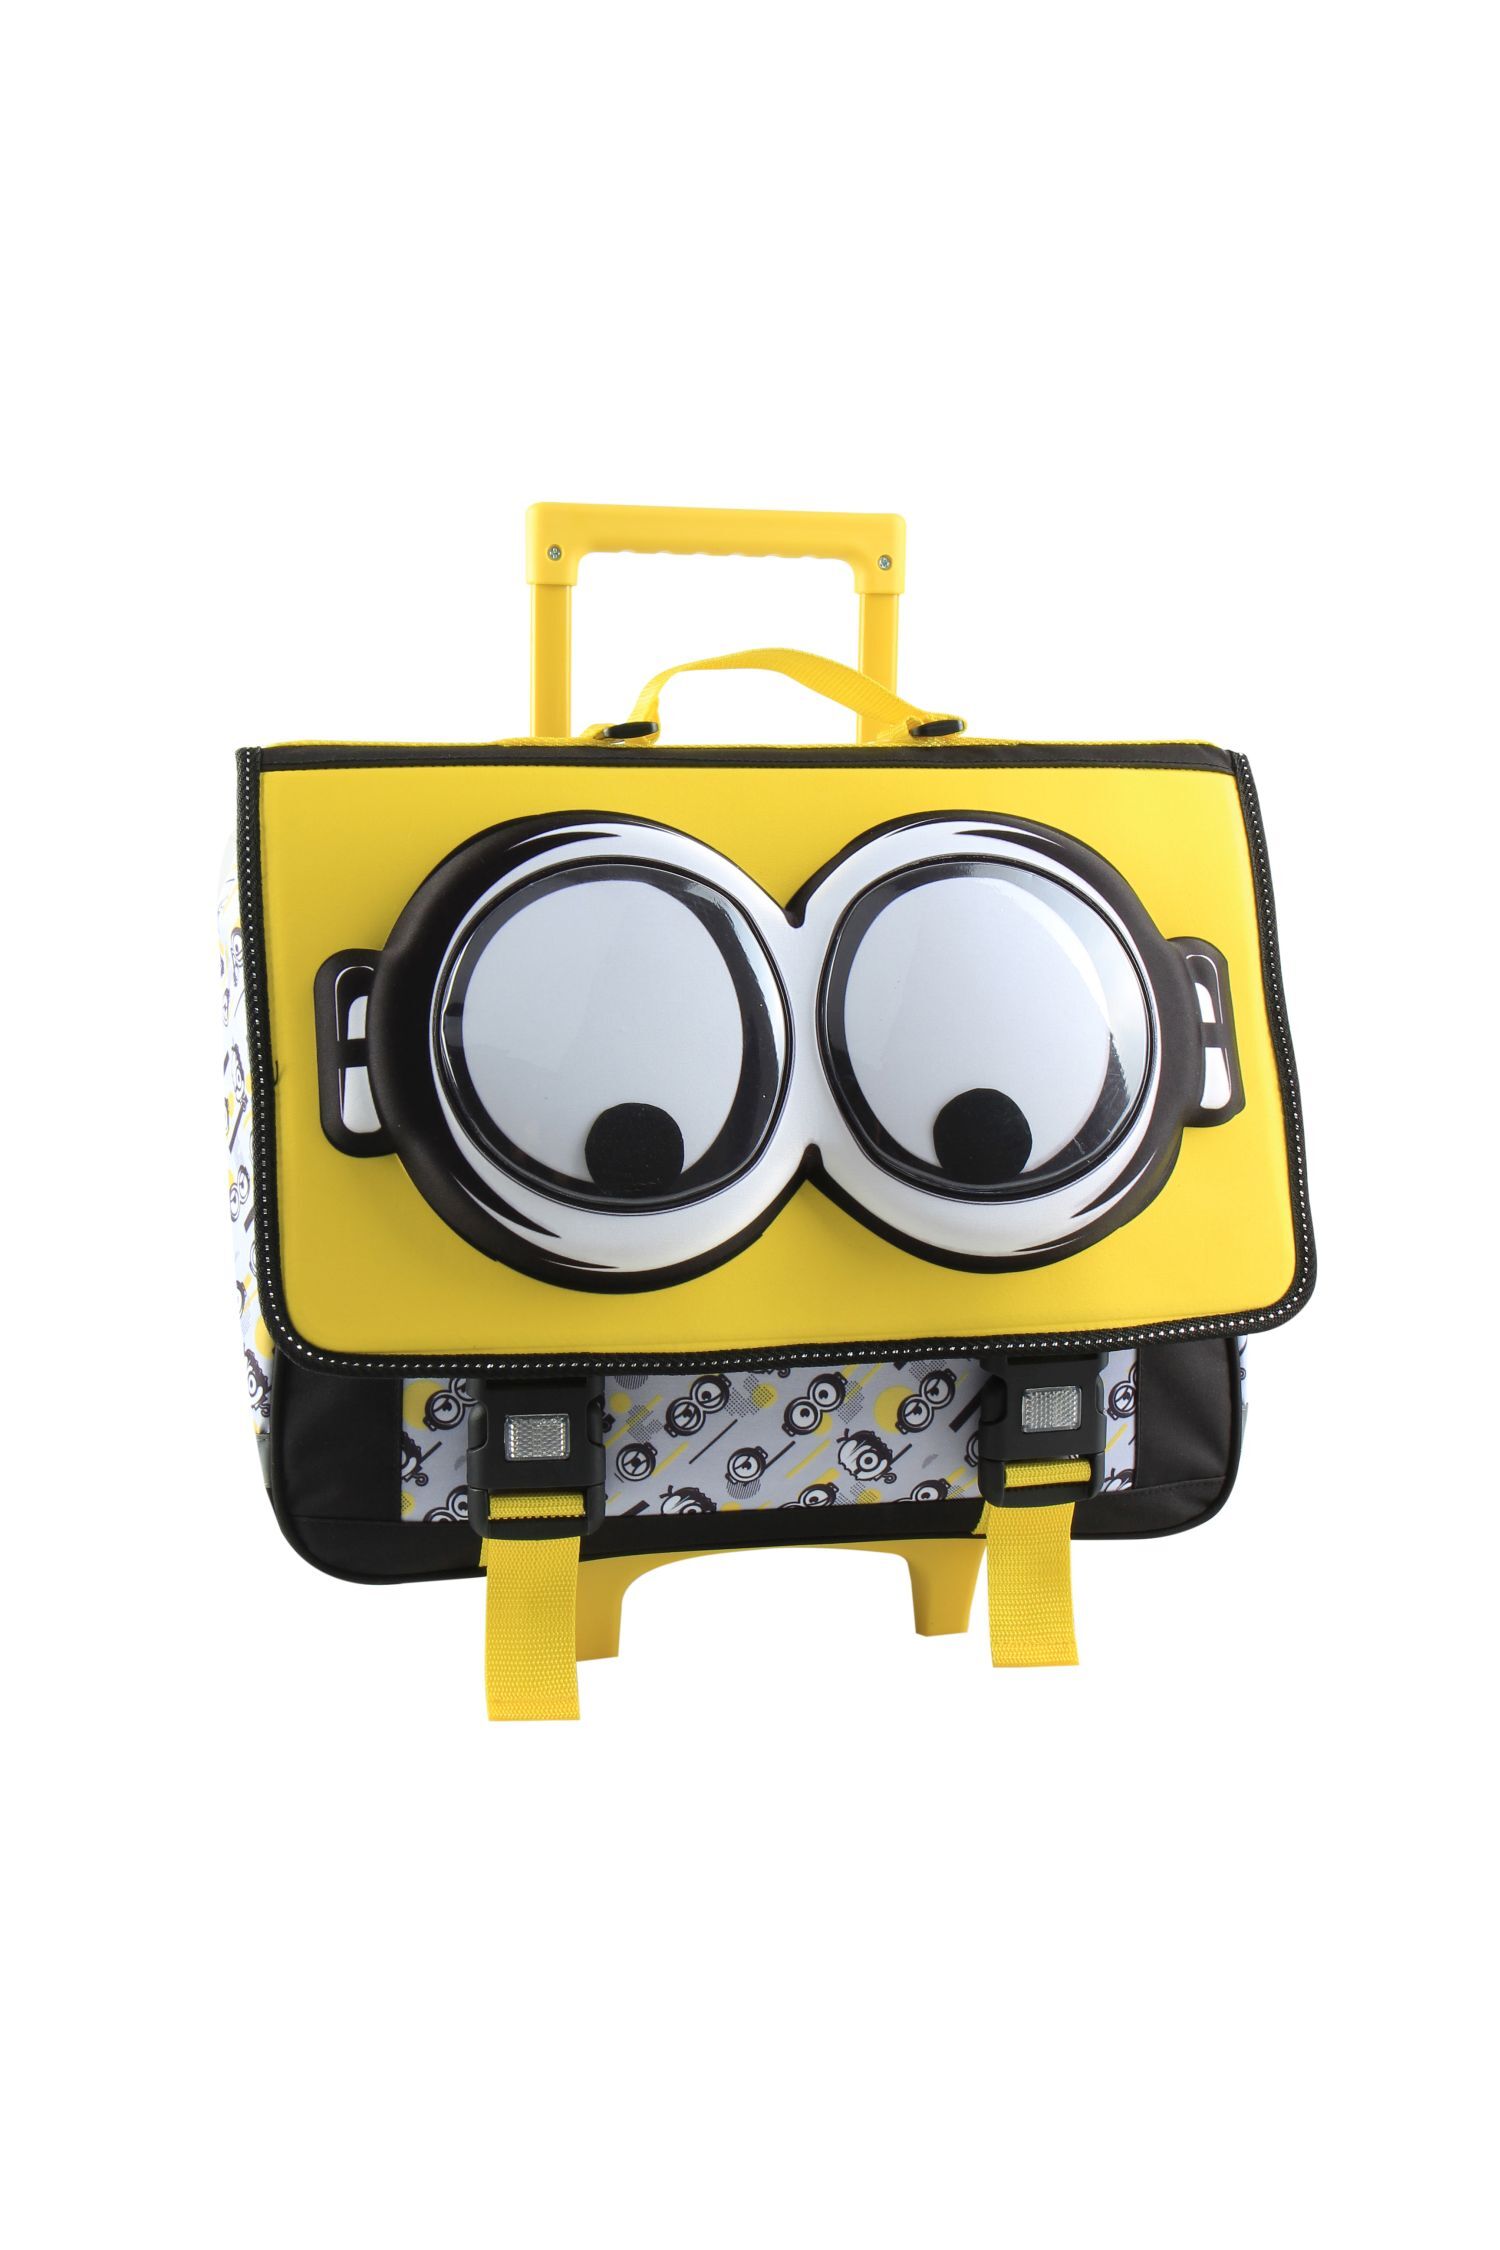 Рюкзак Minions Minions 41cm Ranzen Tasche 3D Augen, желтый набор колпачков minions 2 3d 6 шт